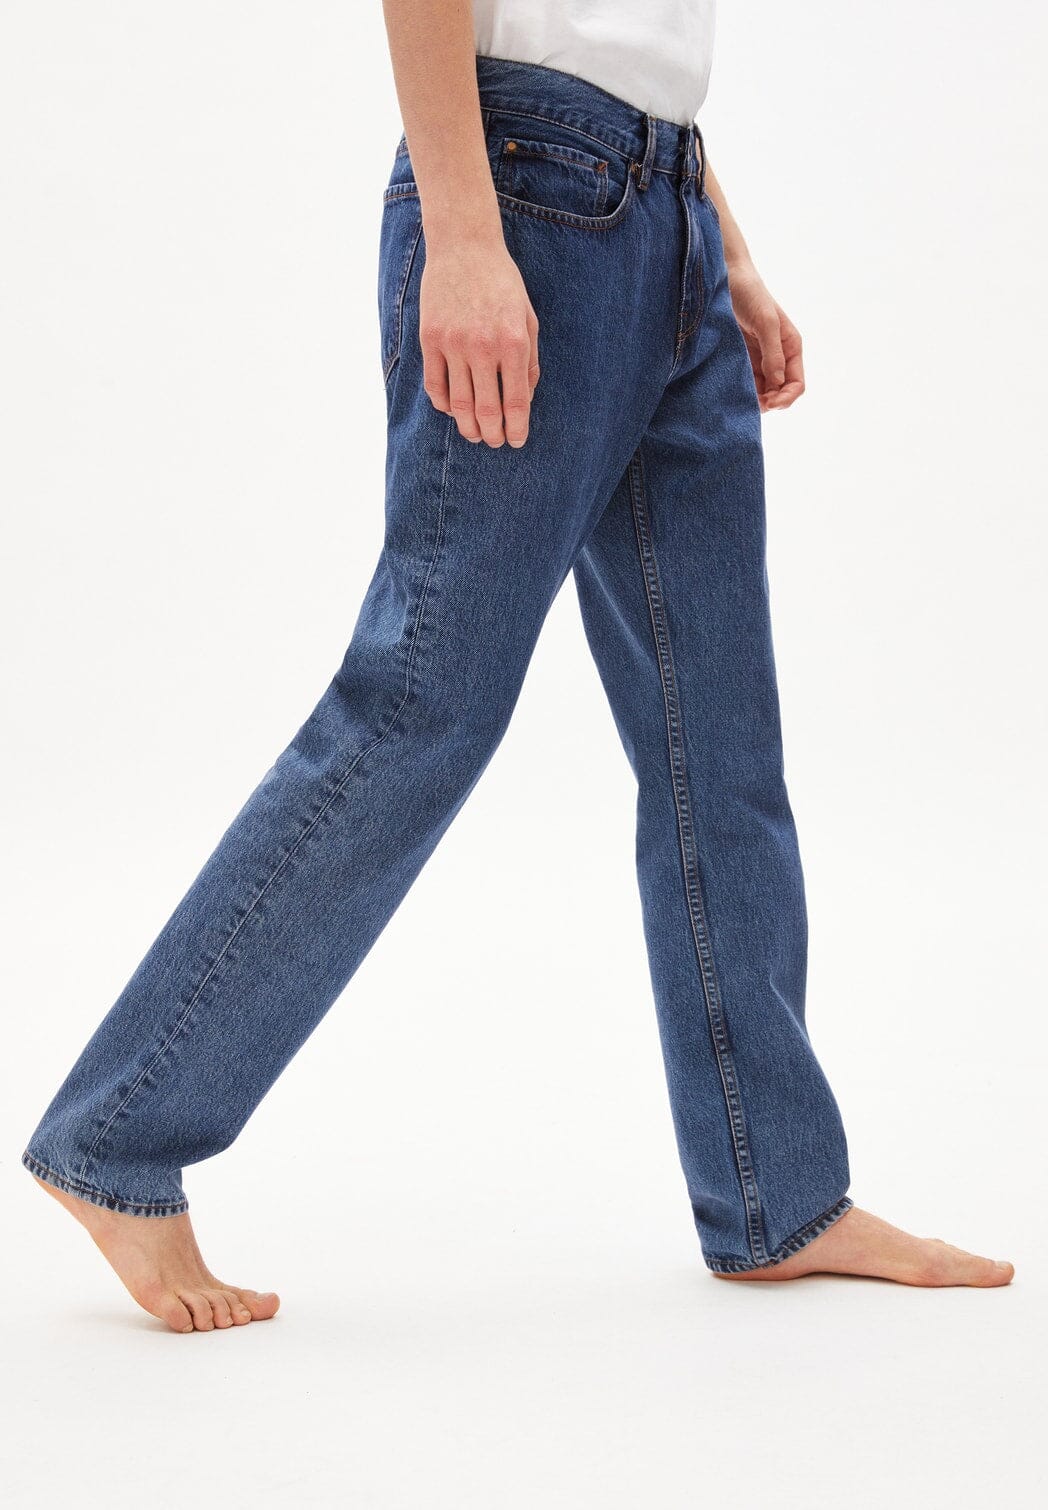 M's retro jeans - Corte recto - Mezcla de algodón orgánico - Weekendbee - sustainable sportswear